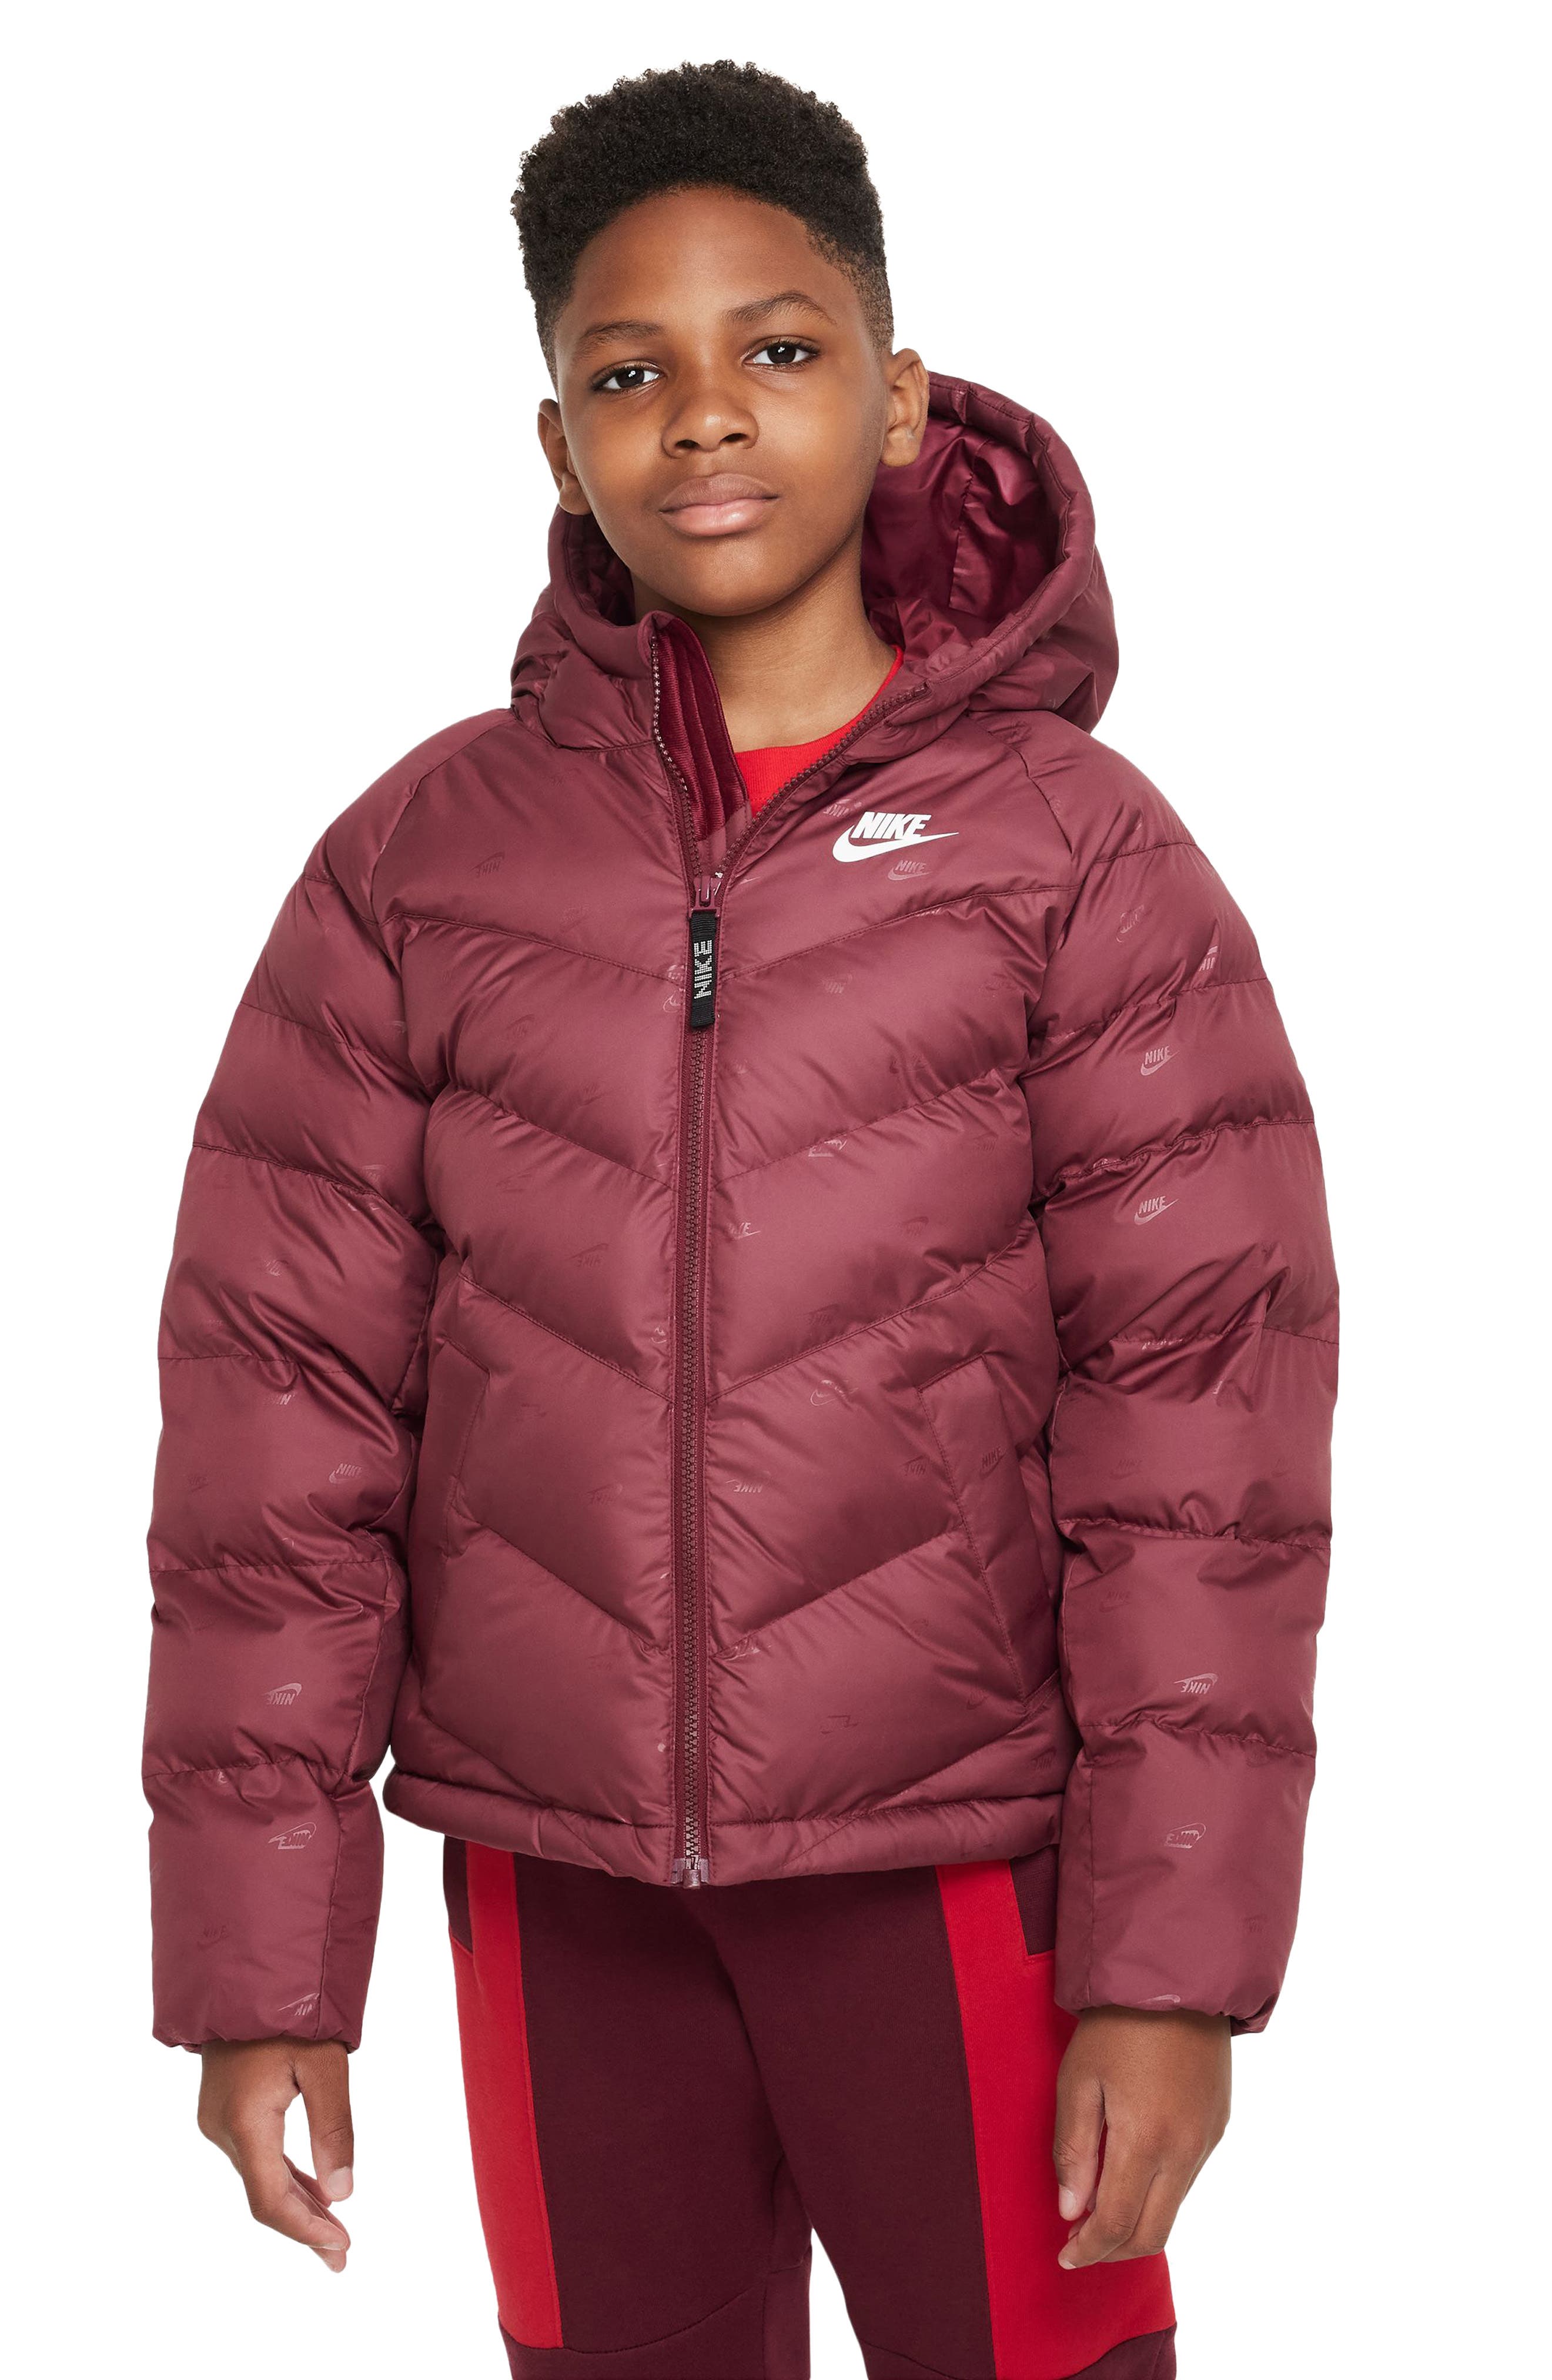 Red 14Y Quicksilver vest discount 97% KIDS FASHION Jackets NO STYLE 